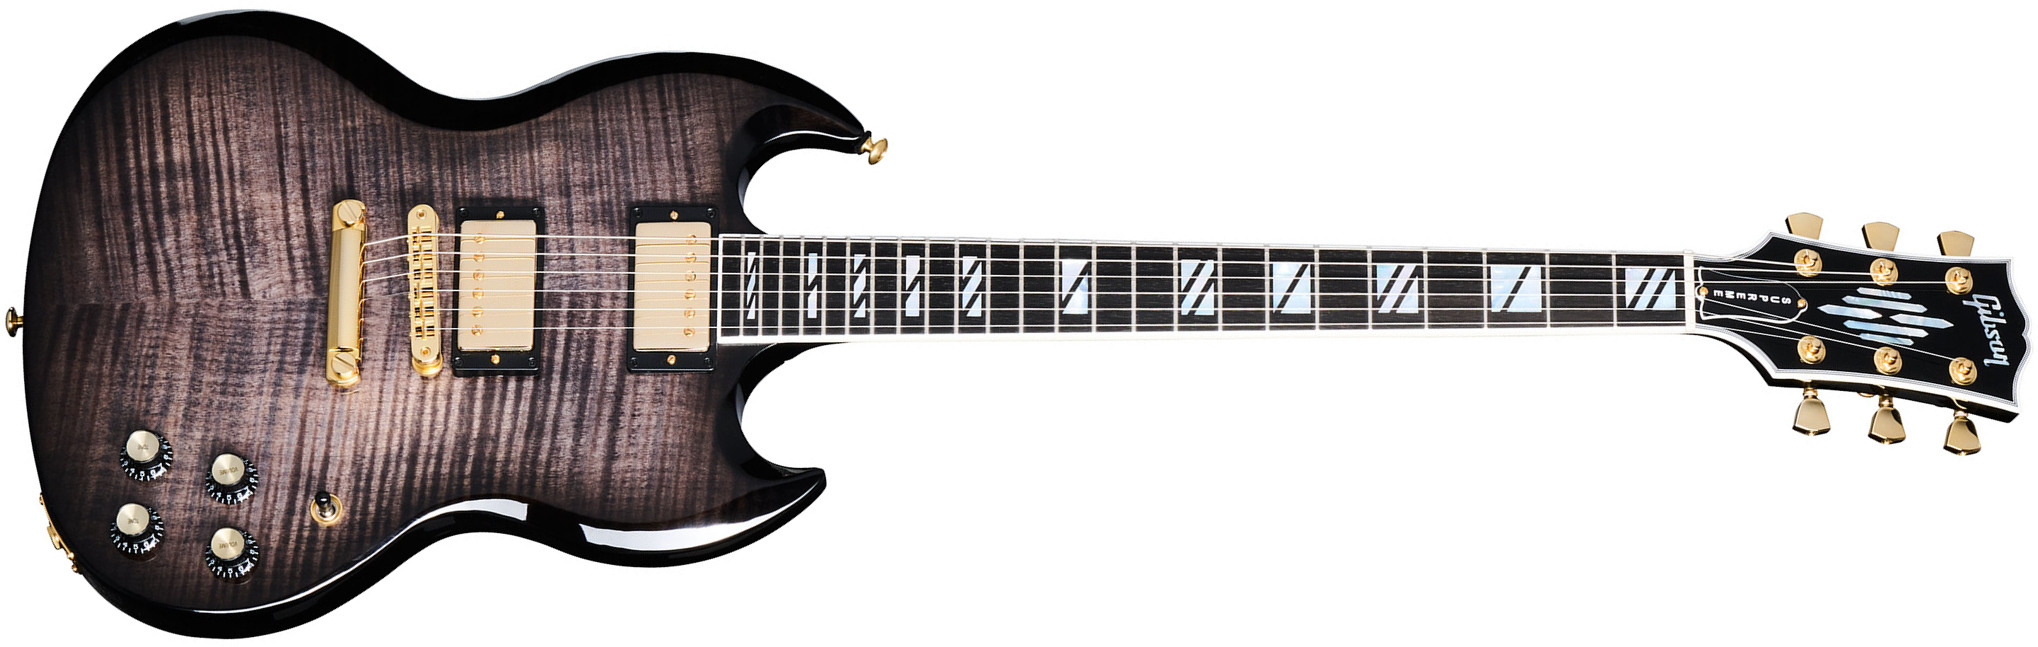 Gibson Sg Supreme Usa 2h Ht Rw - Translucent Ebony Burst - Double cut electric guitar - Main picture